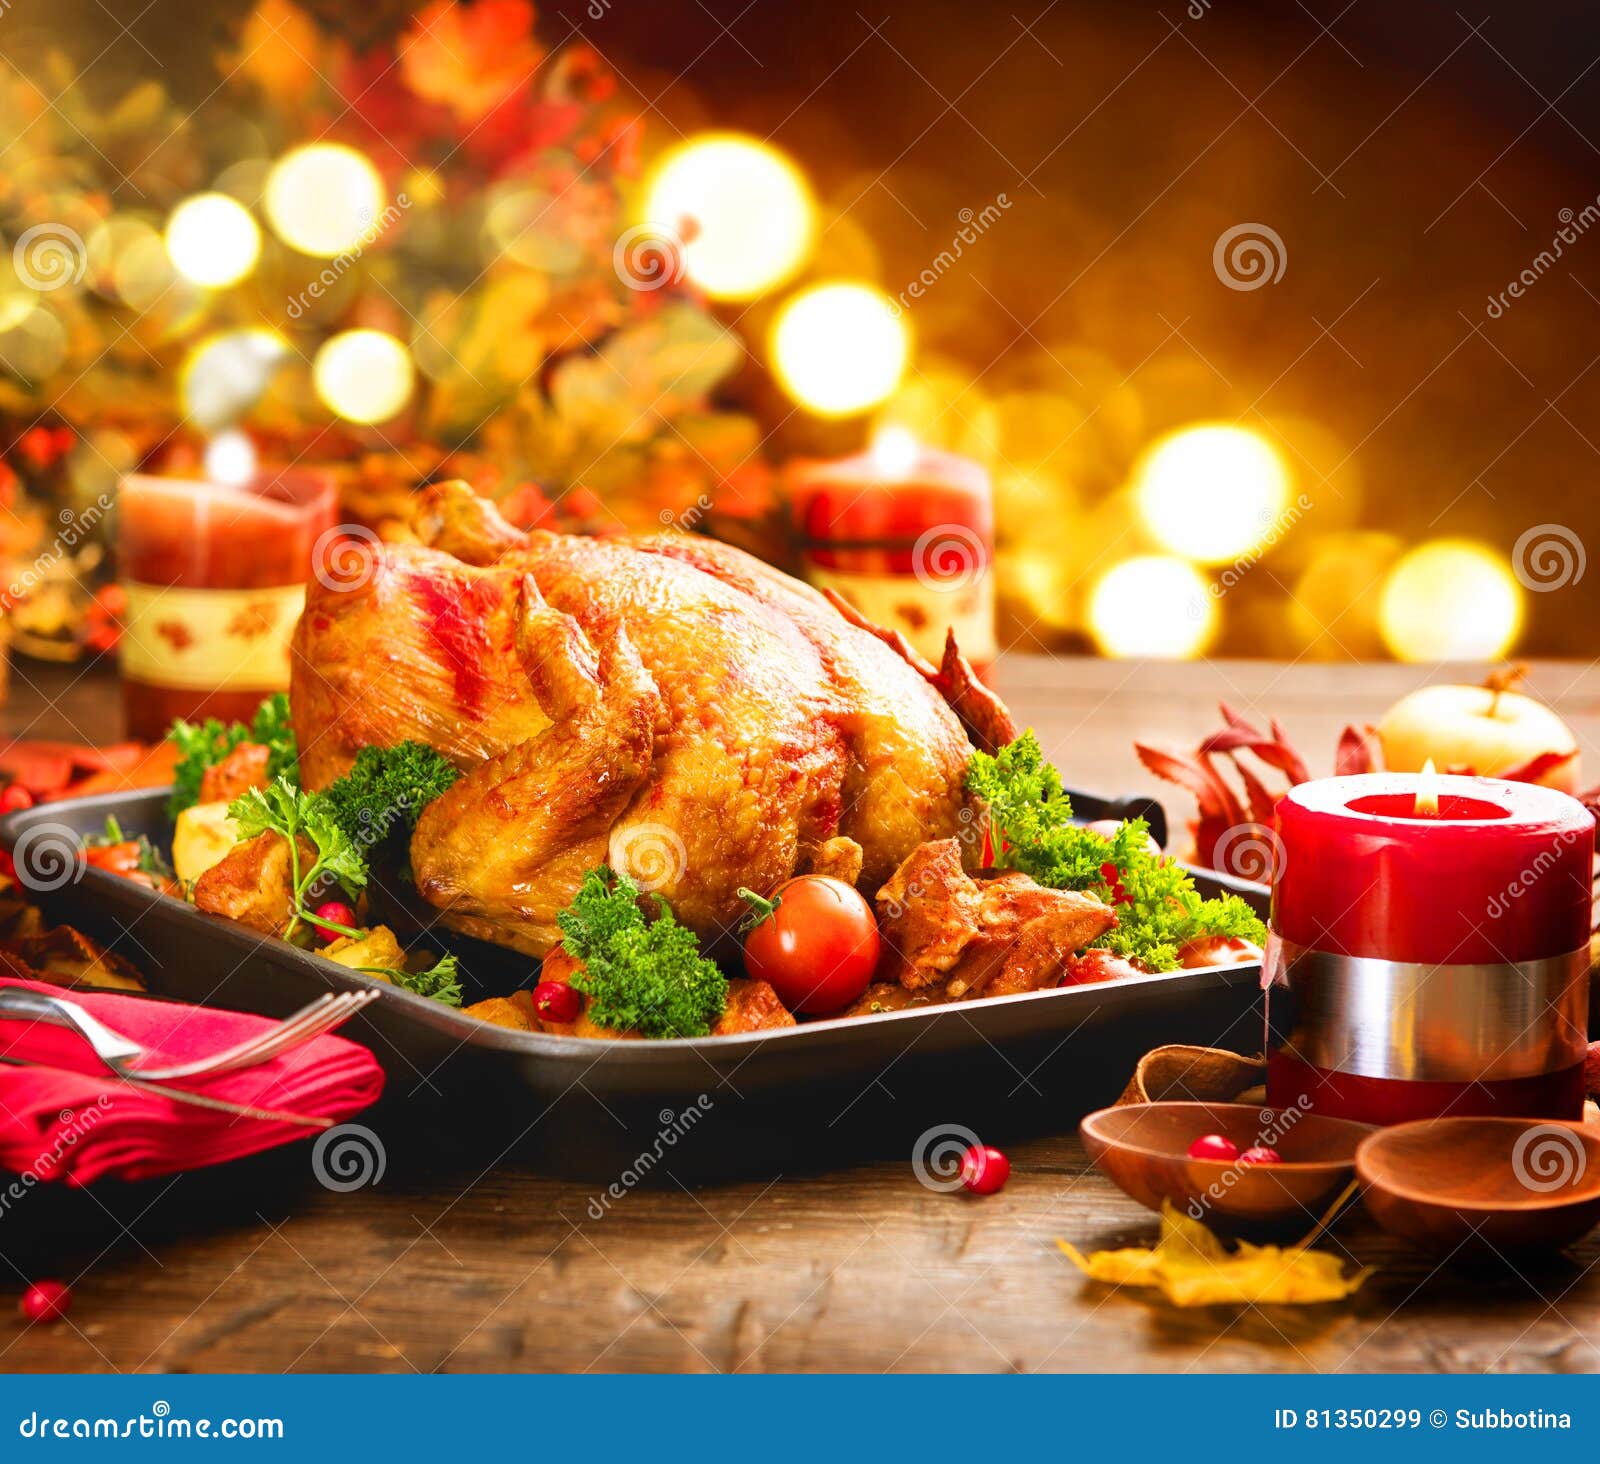 christmas dinner. roasted turkey. winter holiday table